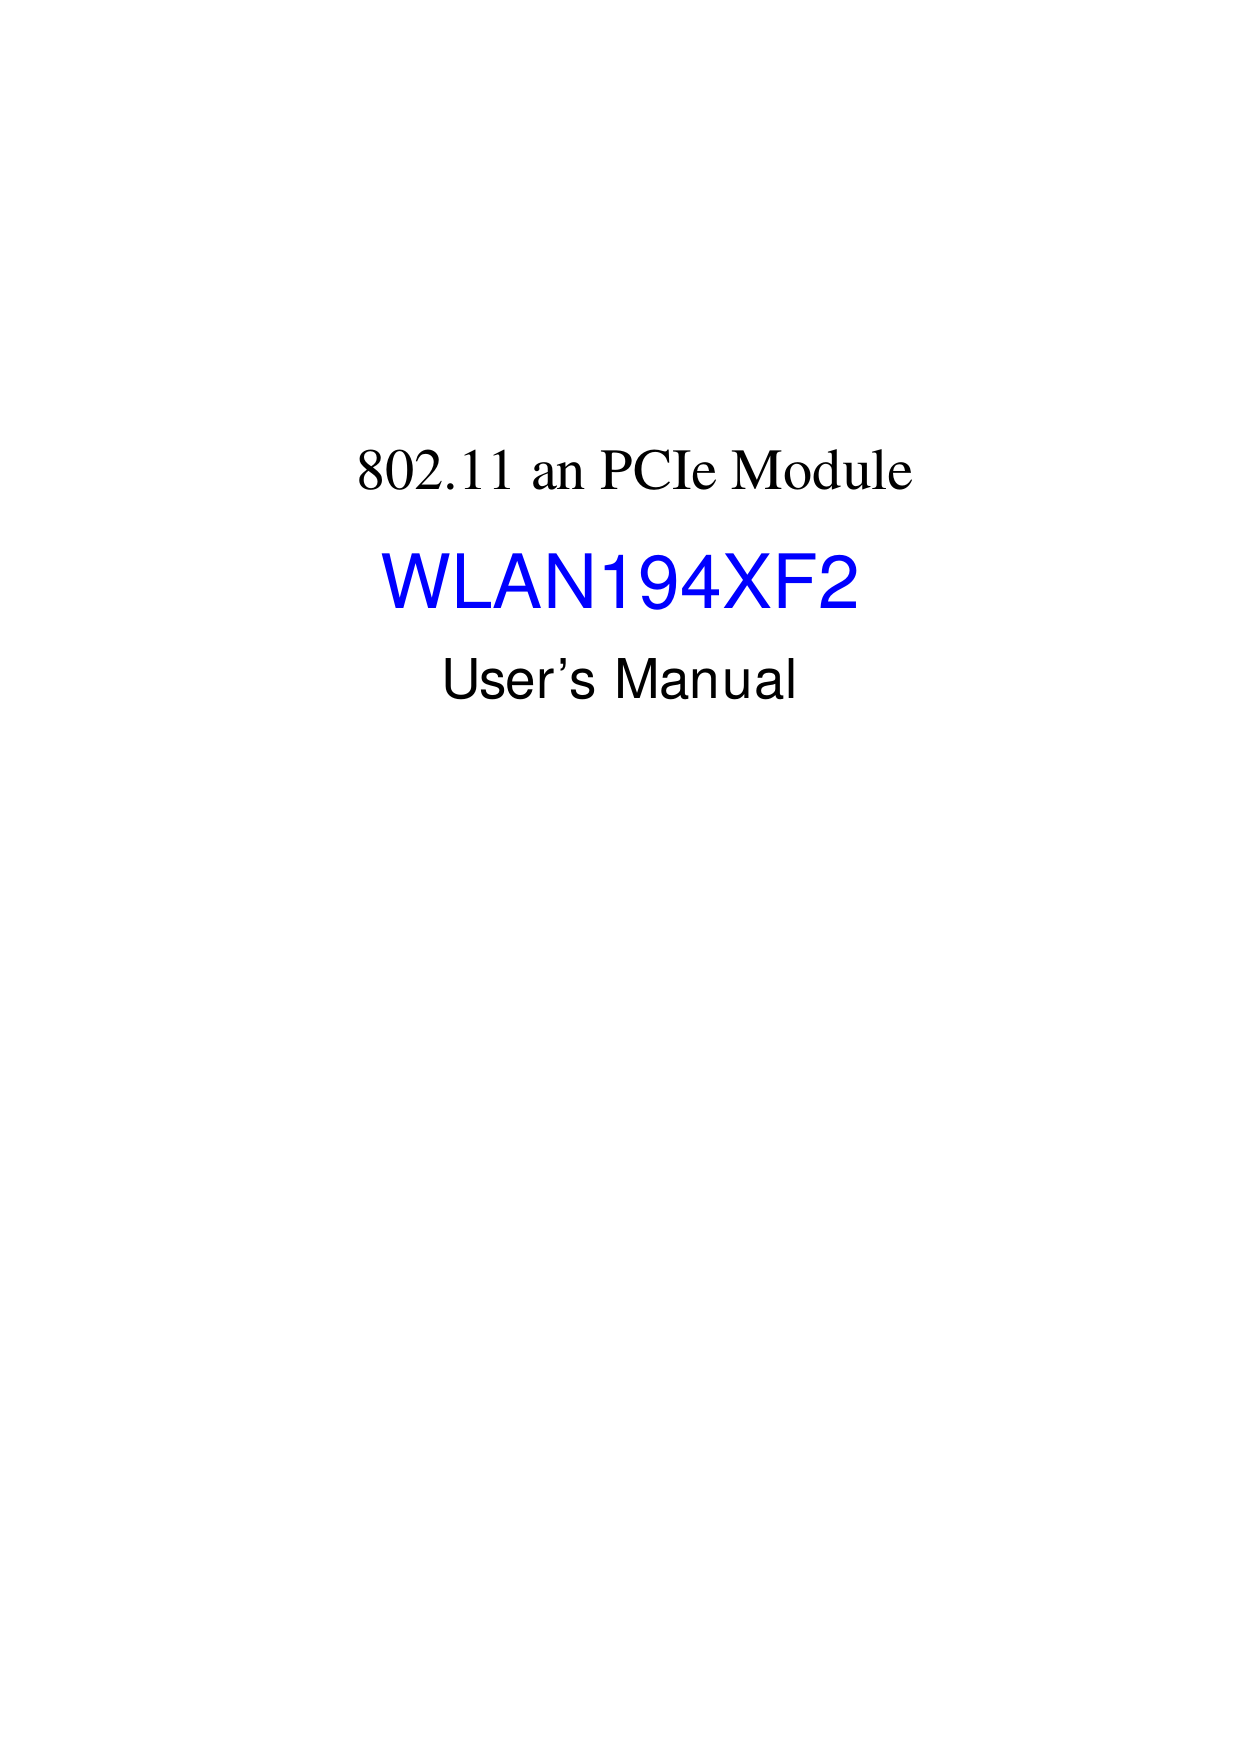       802.11 an PCIe Module  WLAN194XF2 User’s Manual  